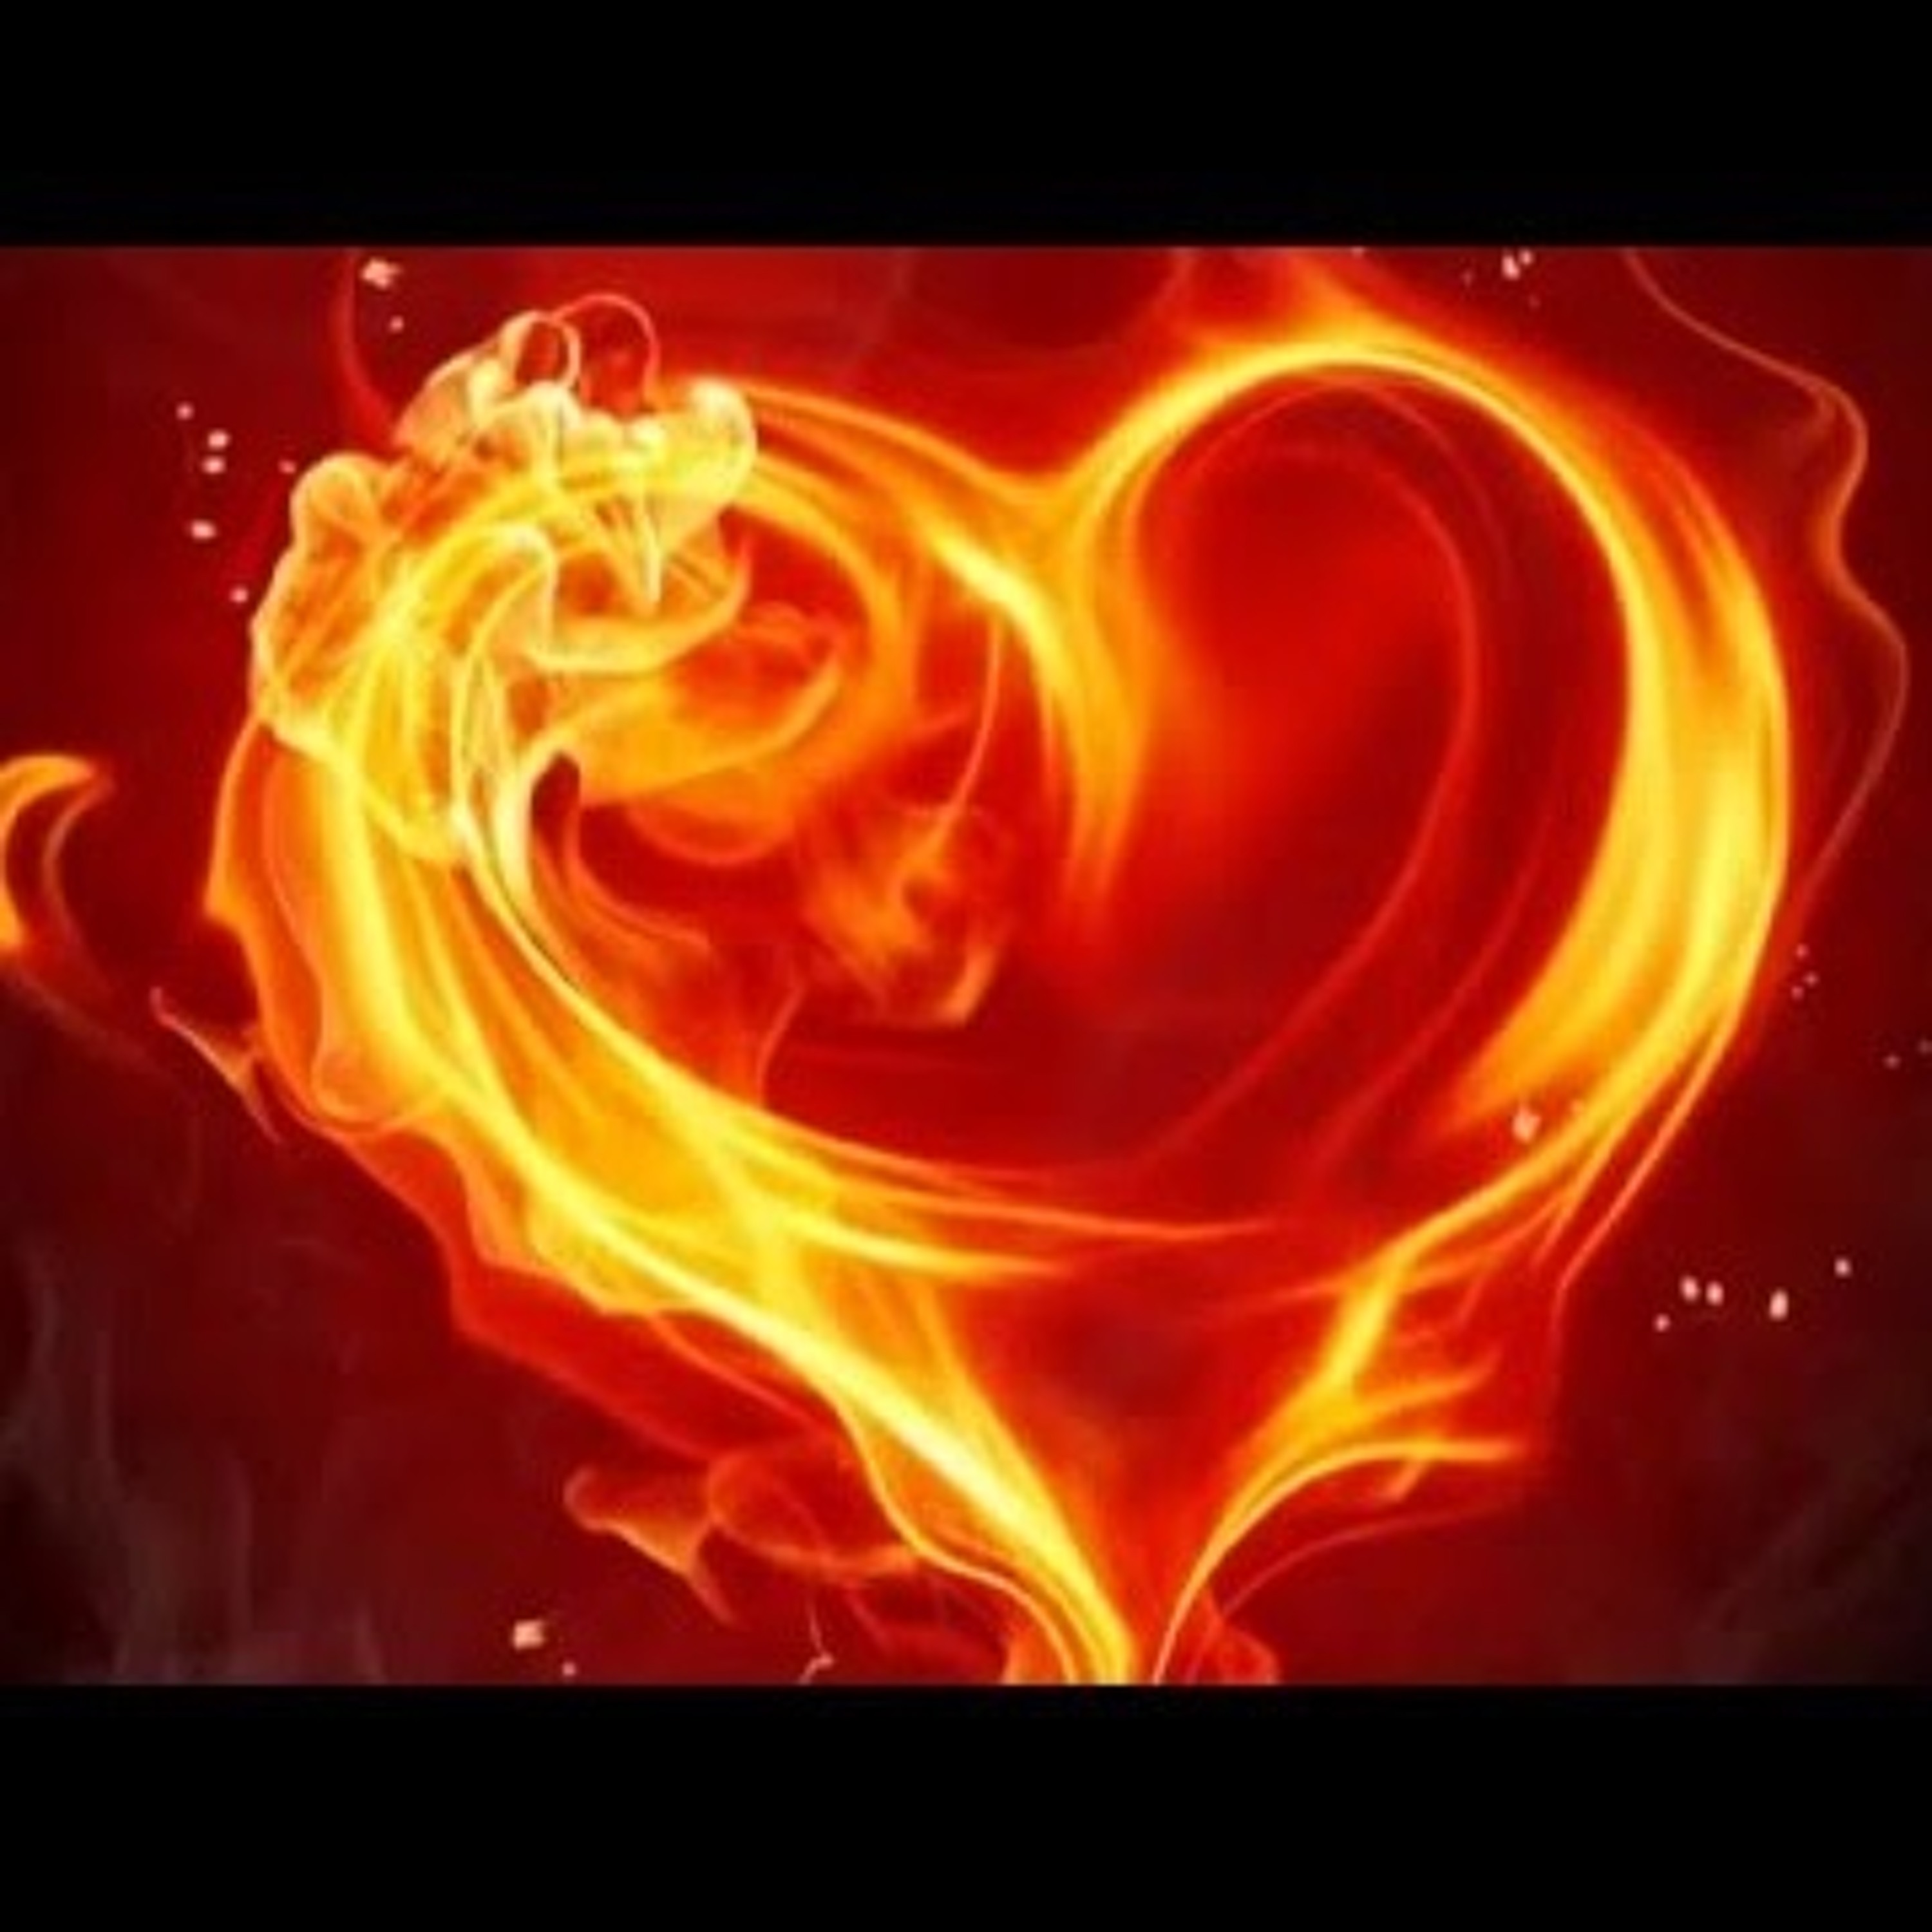 [Meditation] Heart Healing (Music performed live by Living Light)